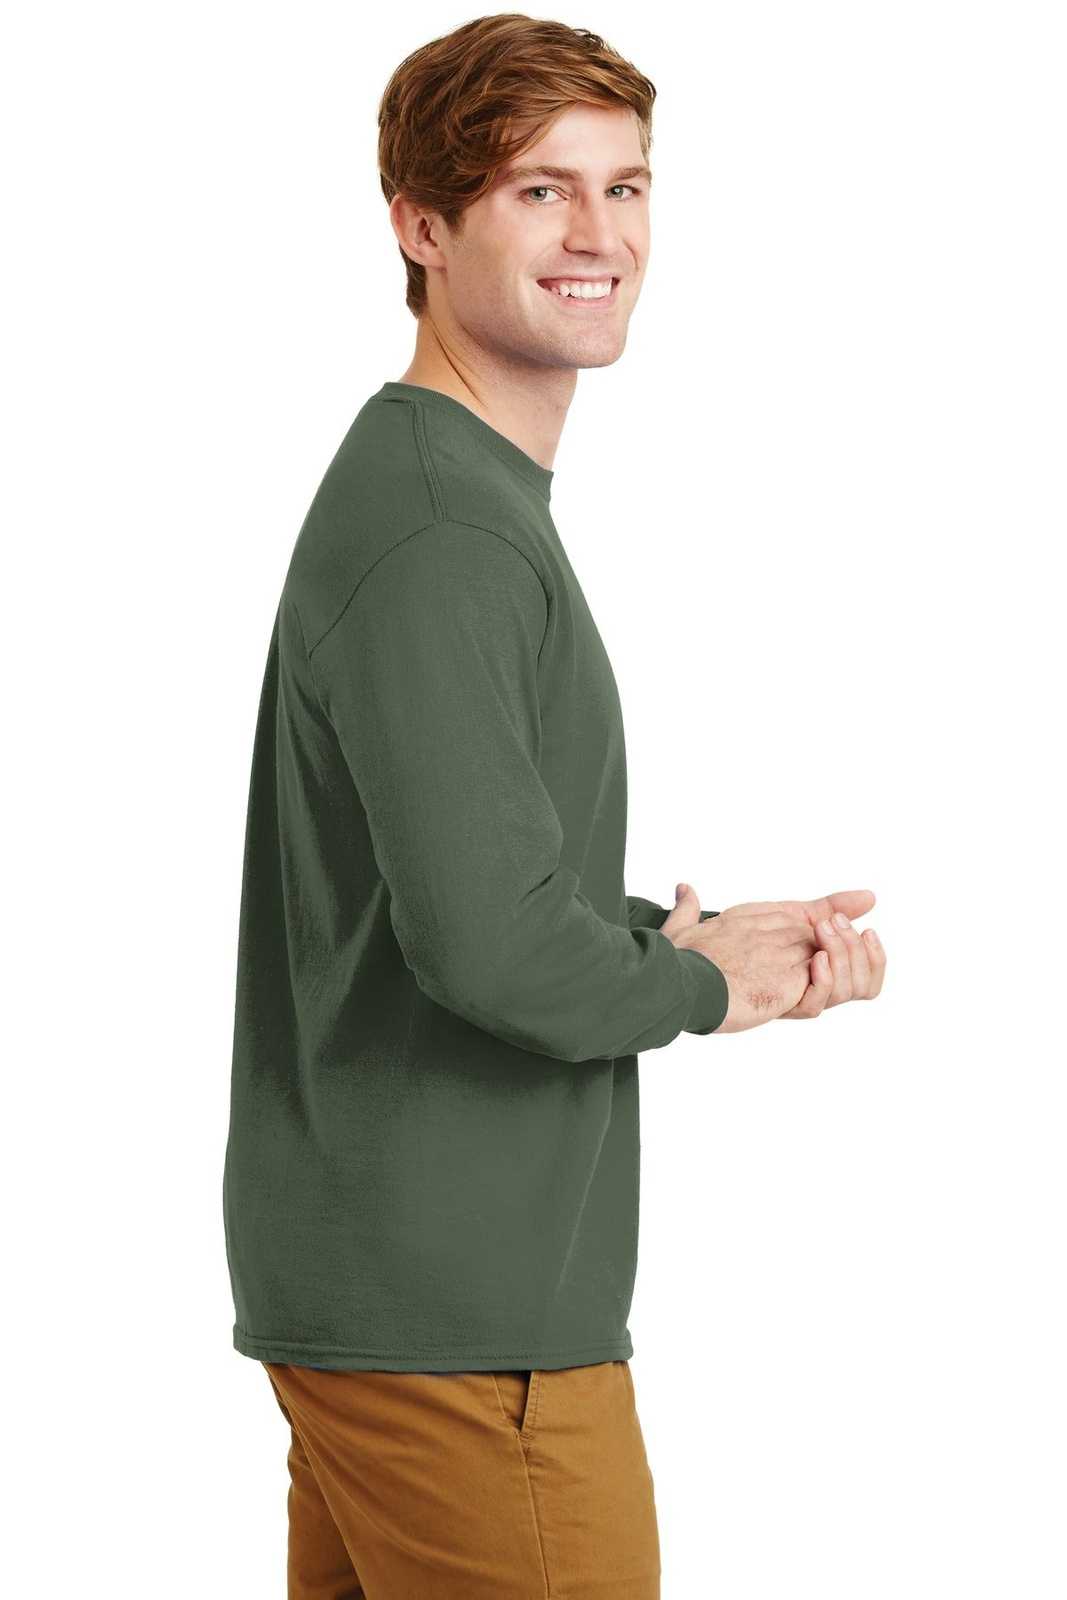 Gildan G2400 Ultra Cotton 100% Cotton Long Sleeve T-Shirt - Military Green - HIT a Double